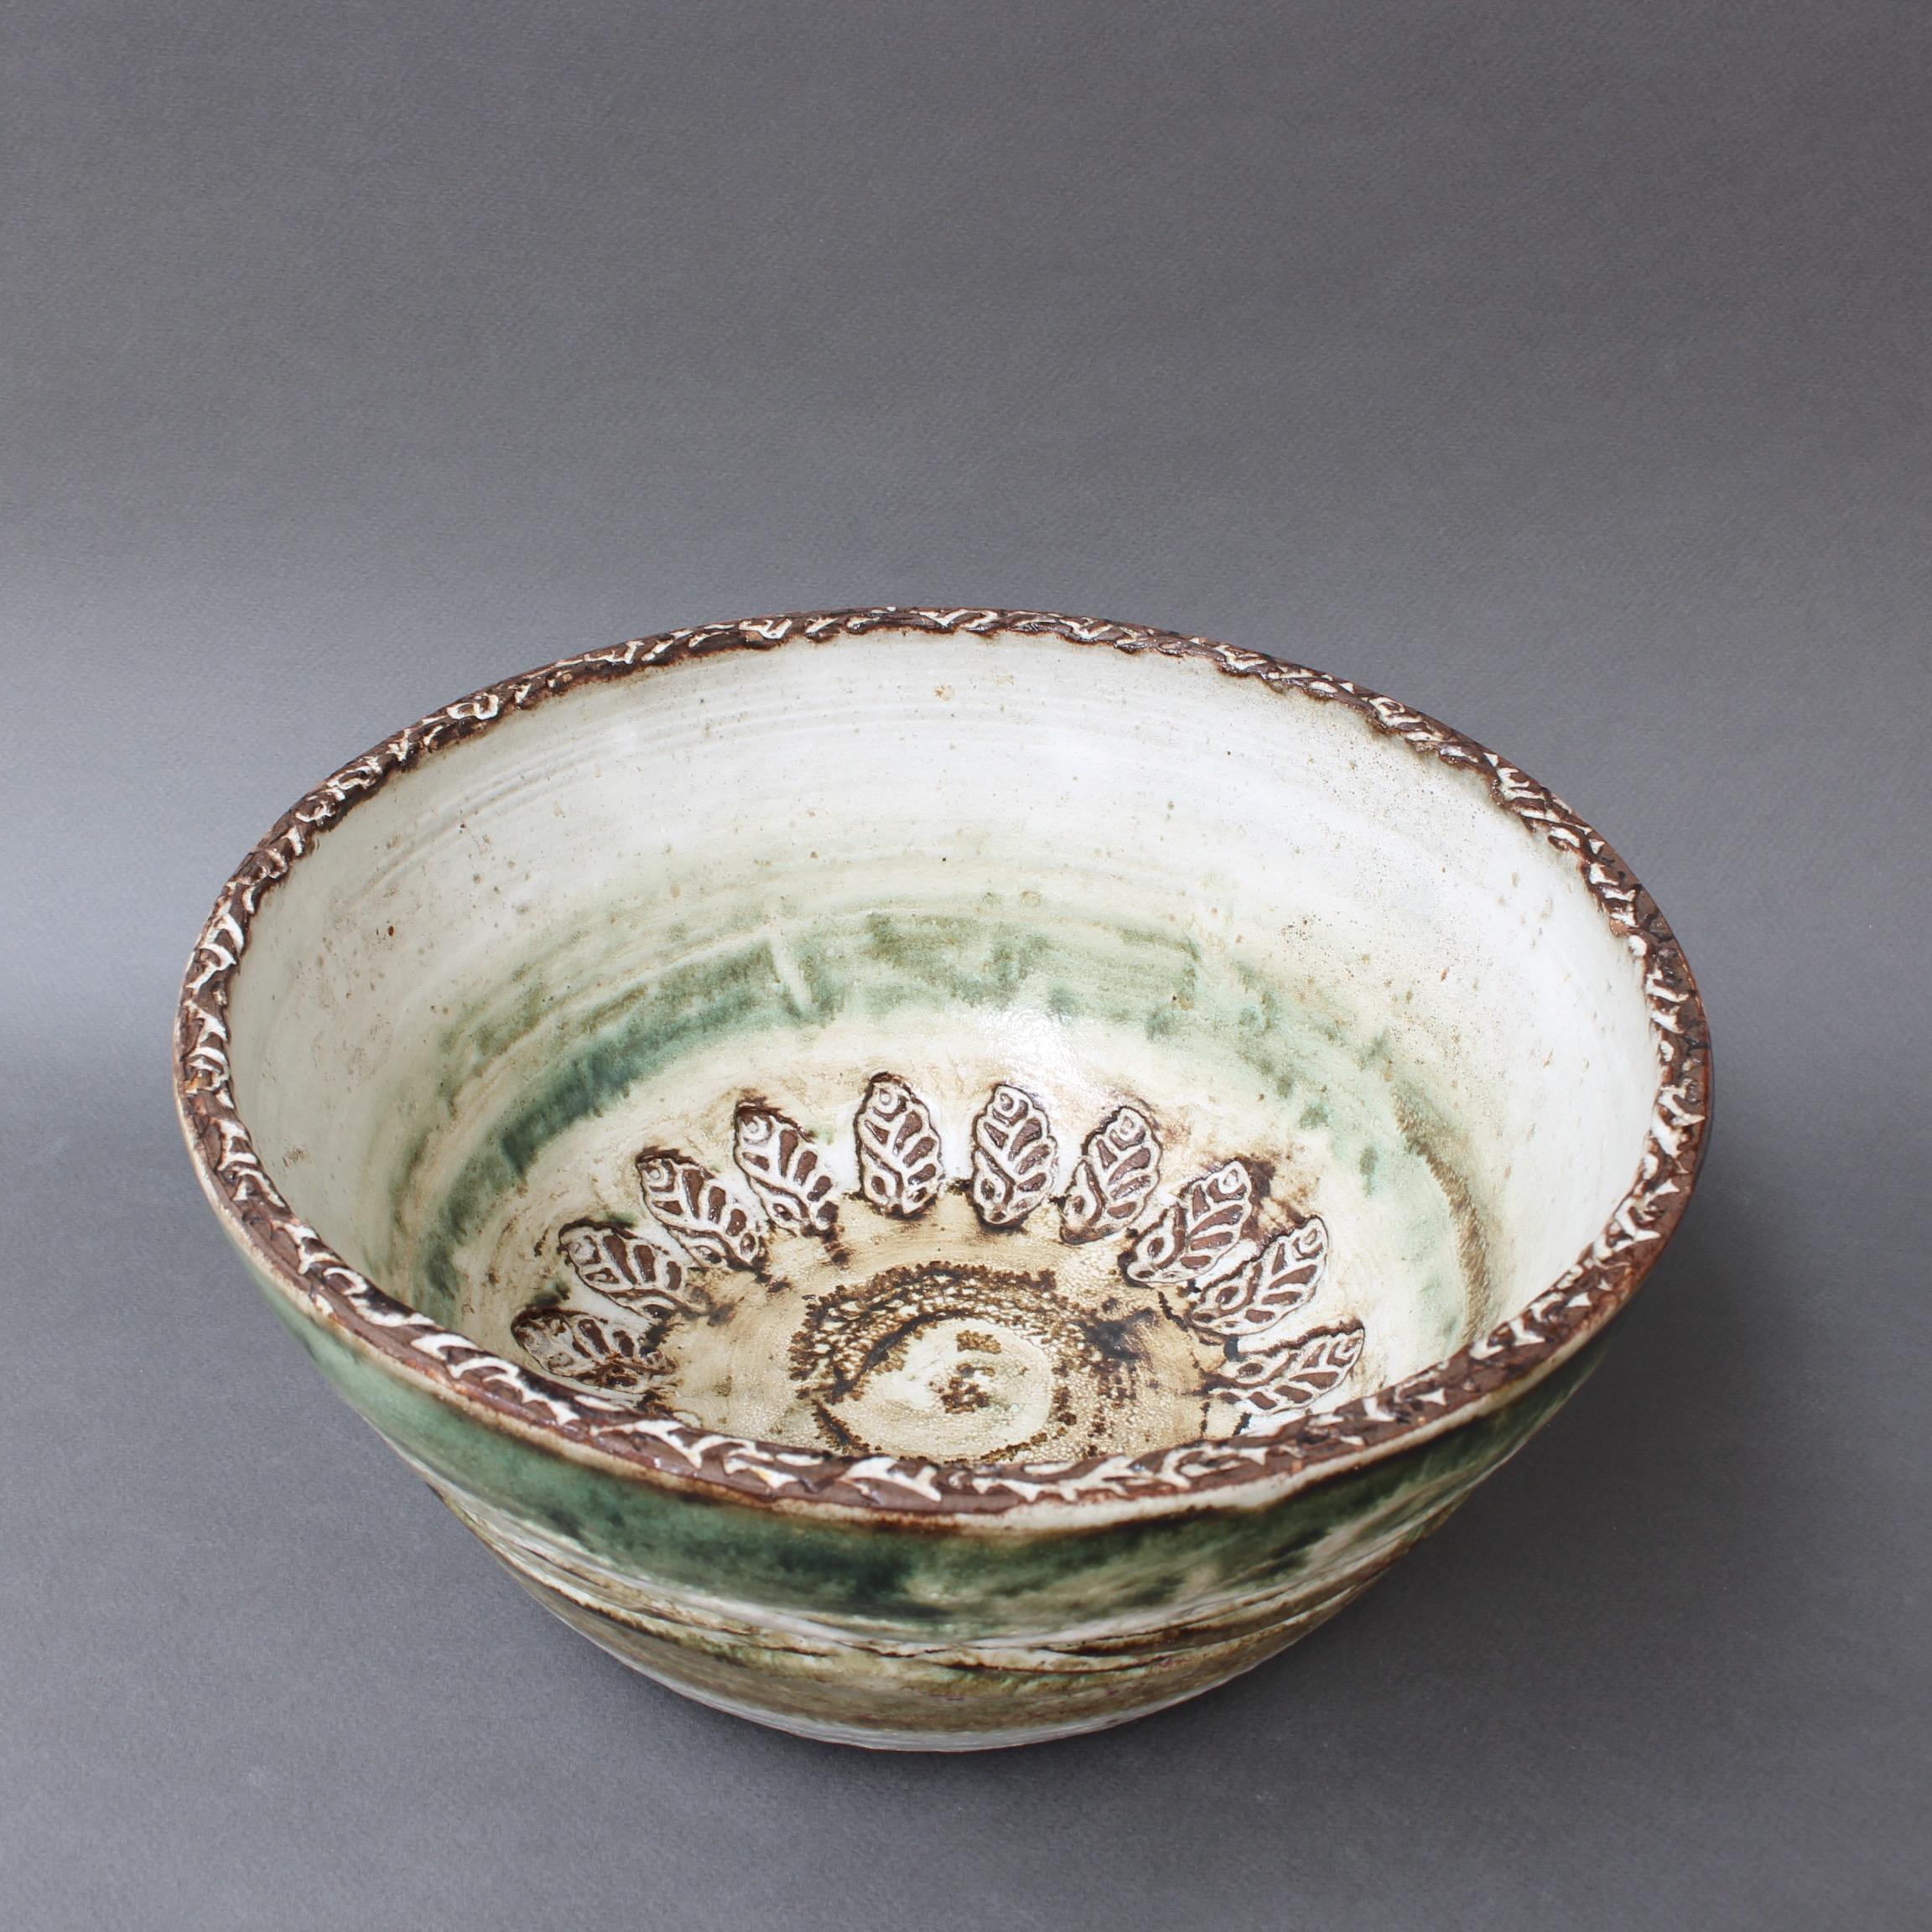 Glazed Midcentury French Decorative Ceramic Bowl by Albert Thiry, circa 1960s